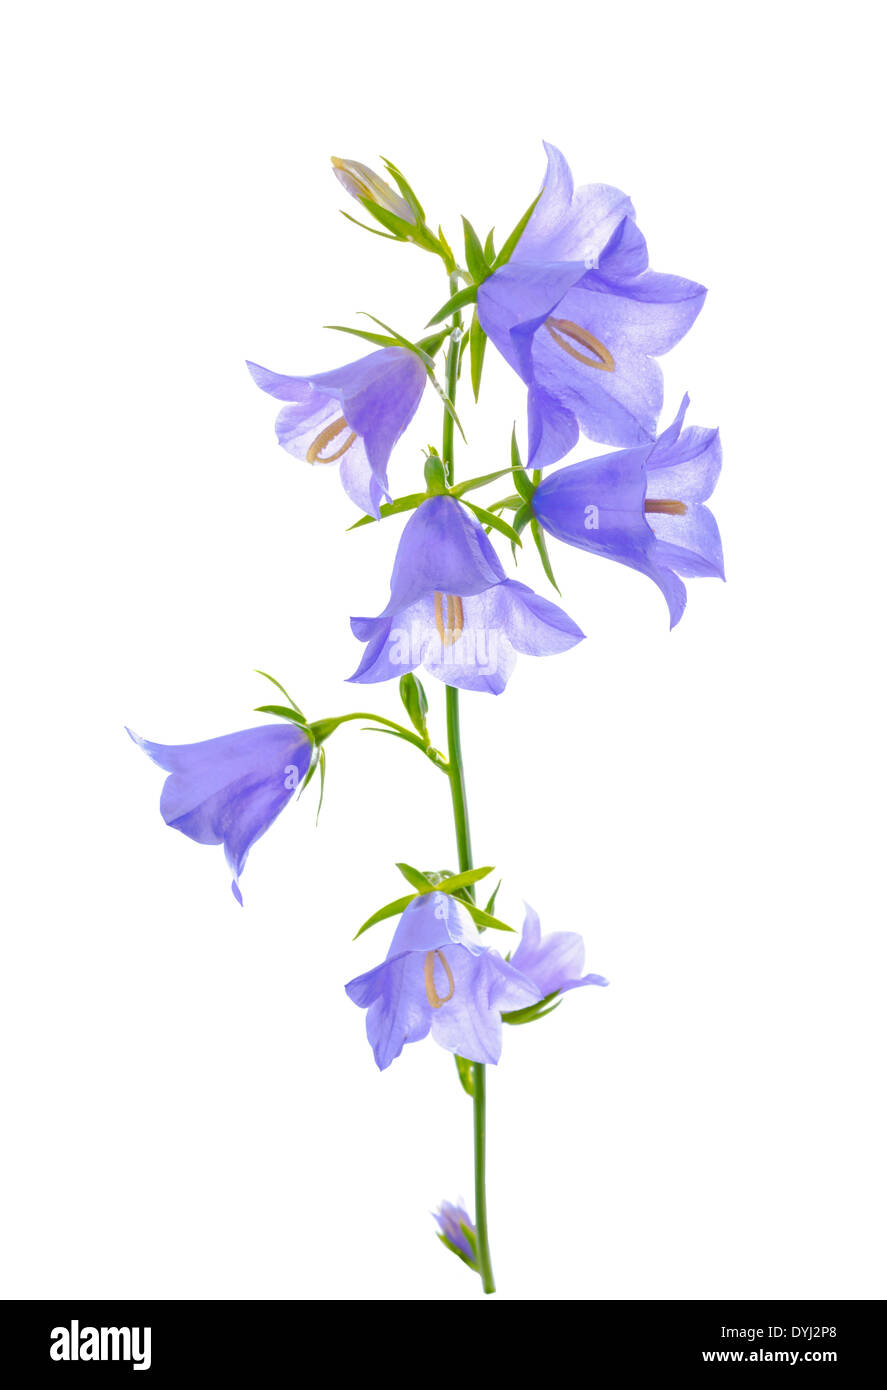 Splendida fioritura bluebell flower, isolato su sfondo bianco Foto Stock